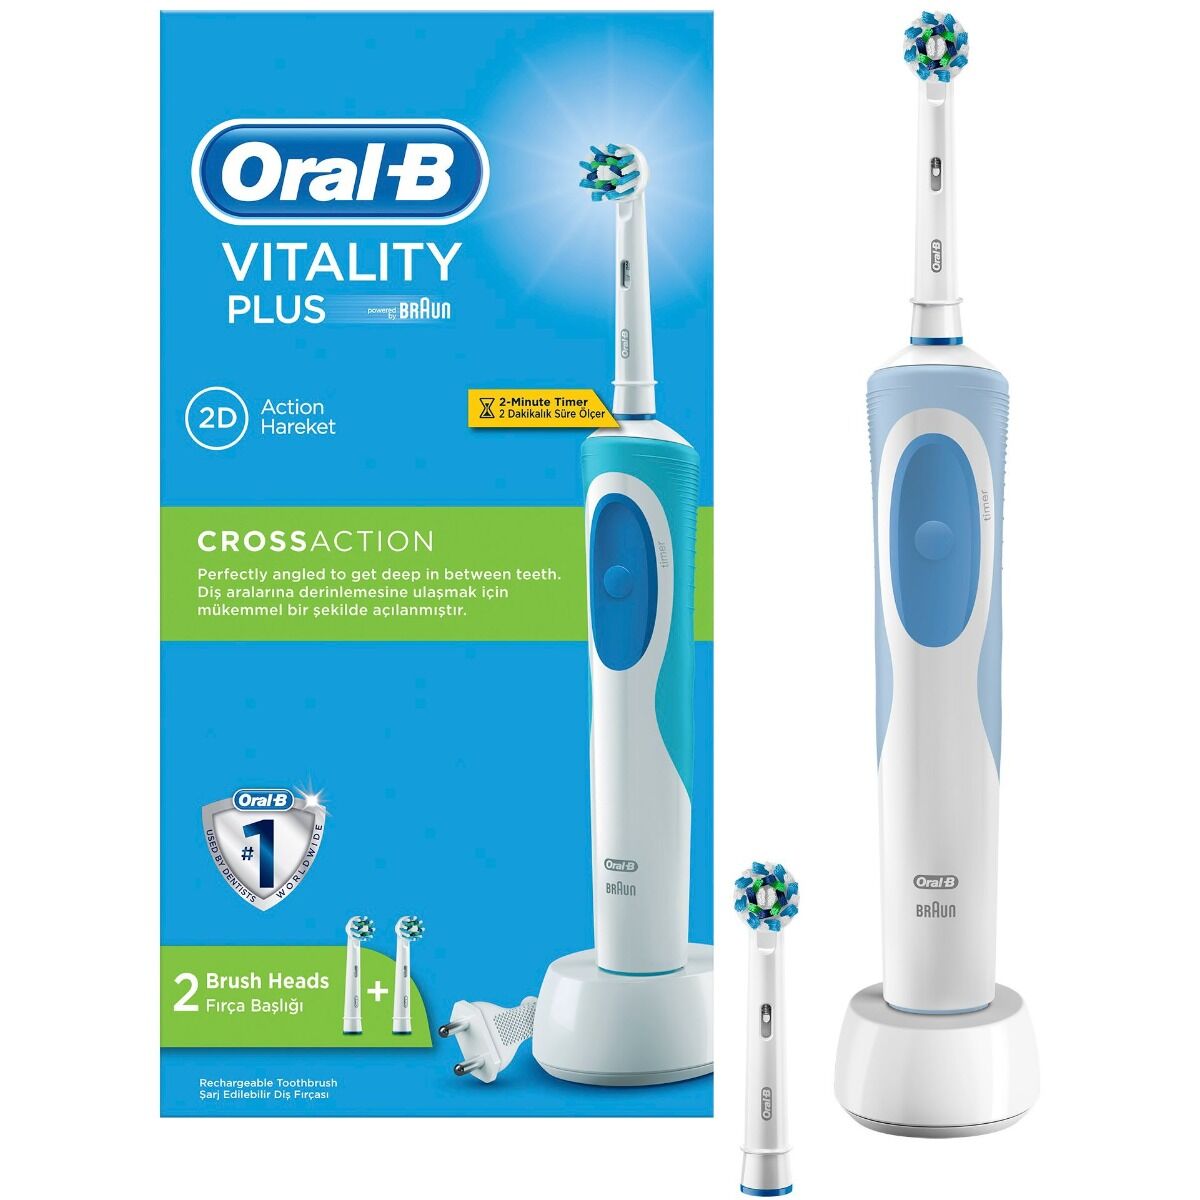 Periuta de dinti electrica Oral-B Vitality Plus Cross Action, 7600 ocilatii/min, Curatare 2D, 1 Program, 2 Capete, Alb/Albastru